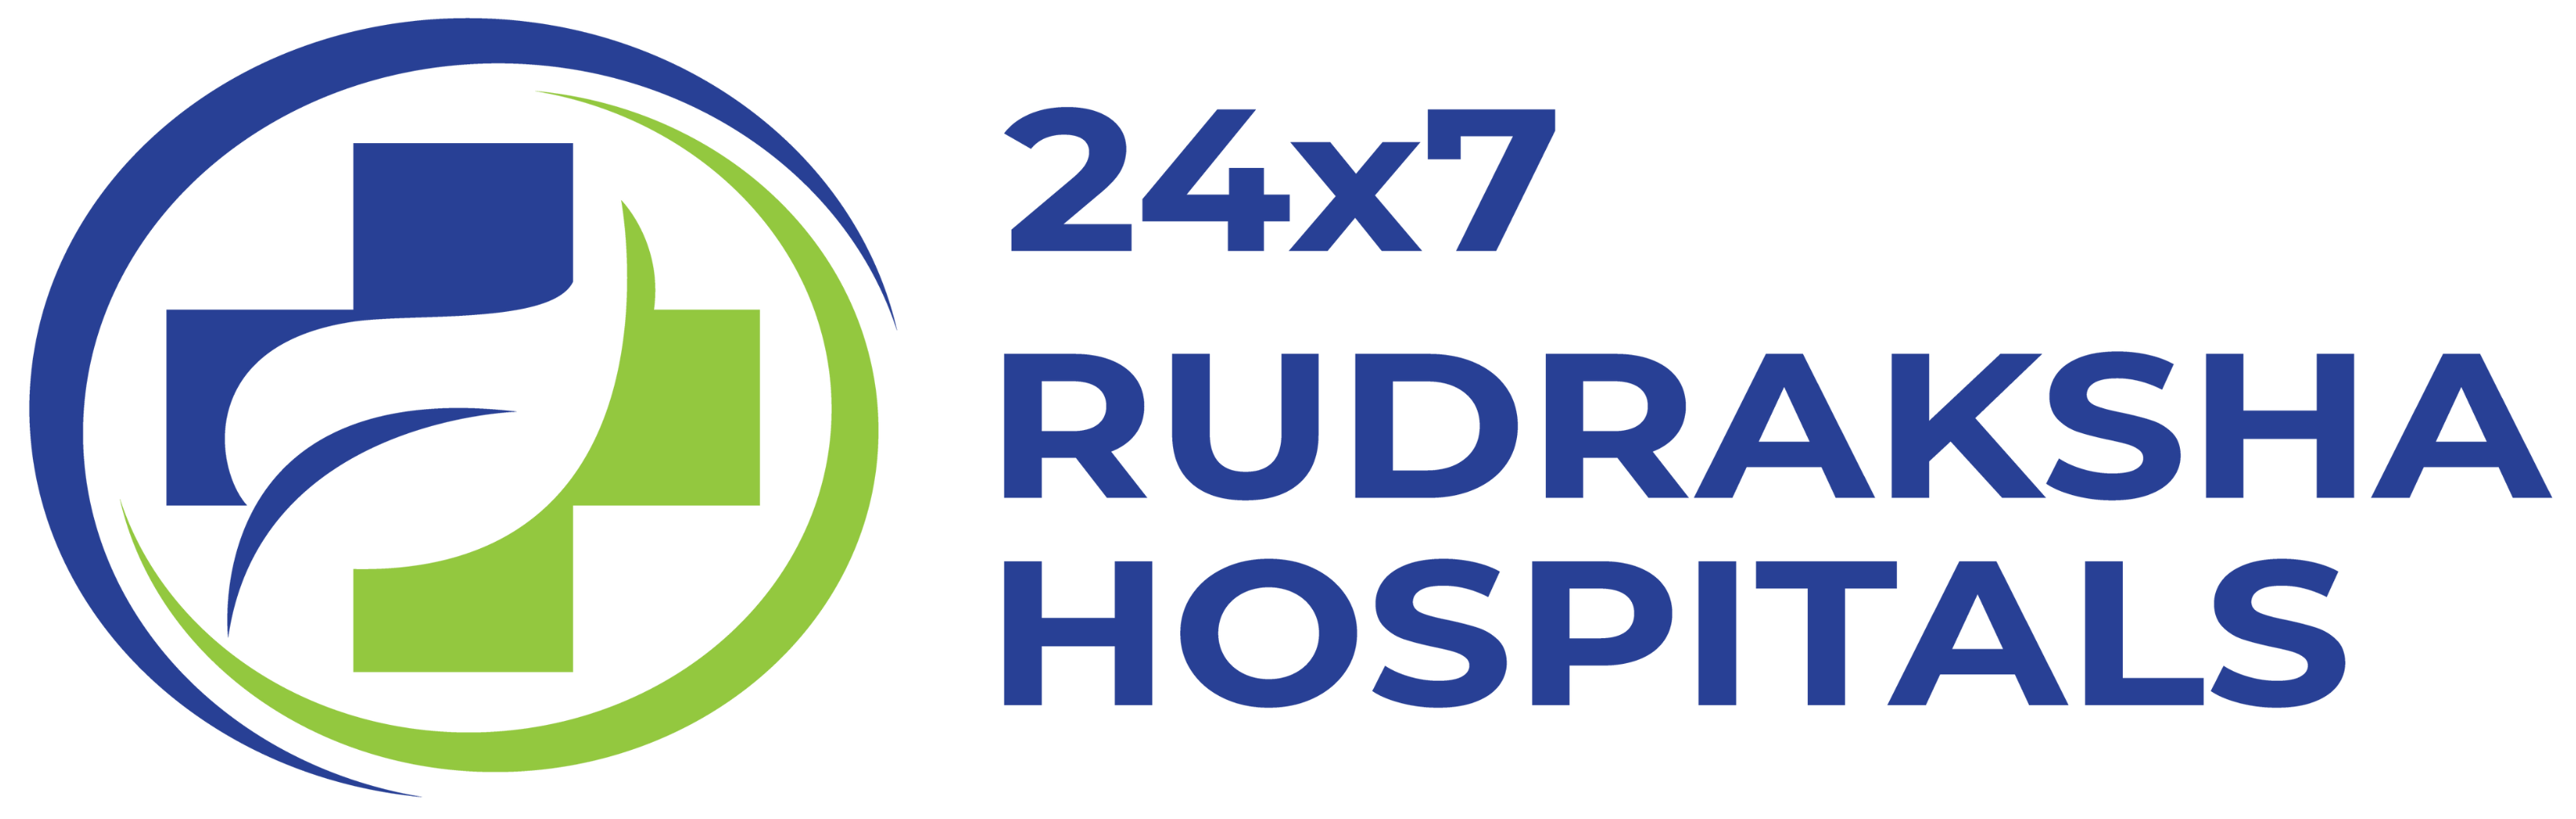 24x7 Rudraksha Multispeciality Hospitals